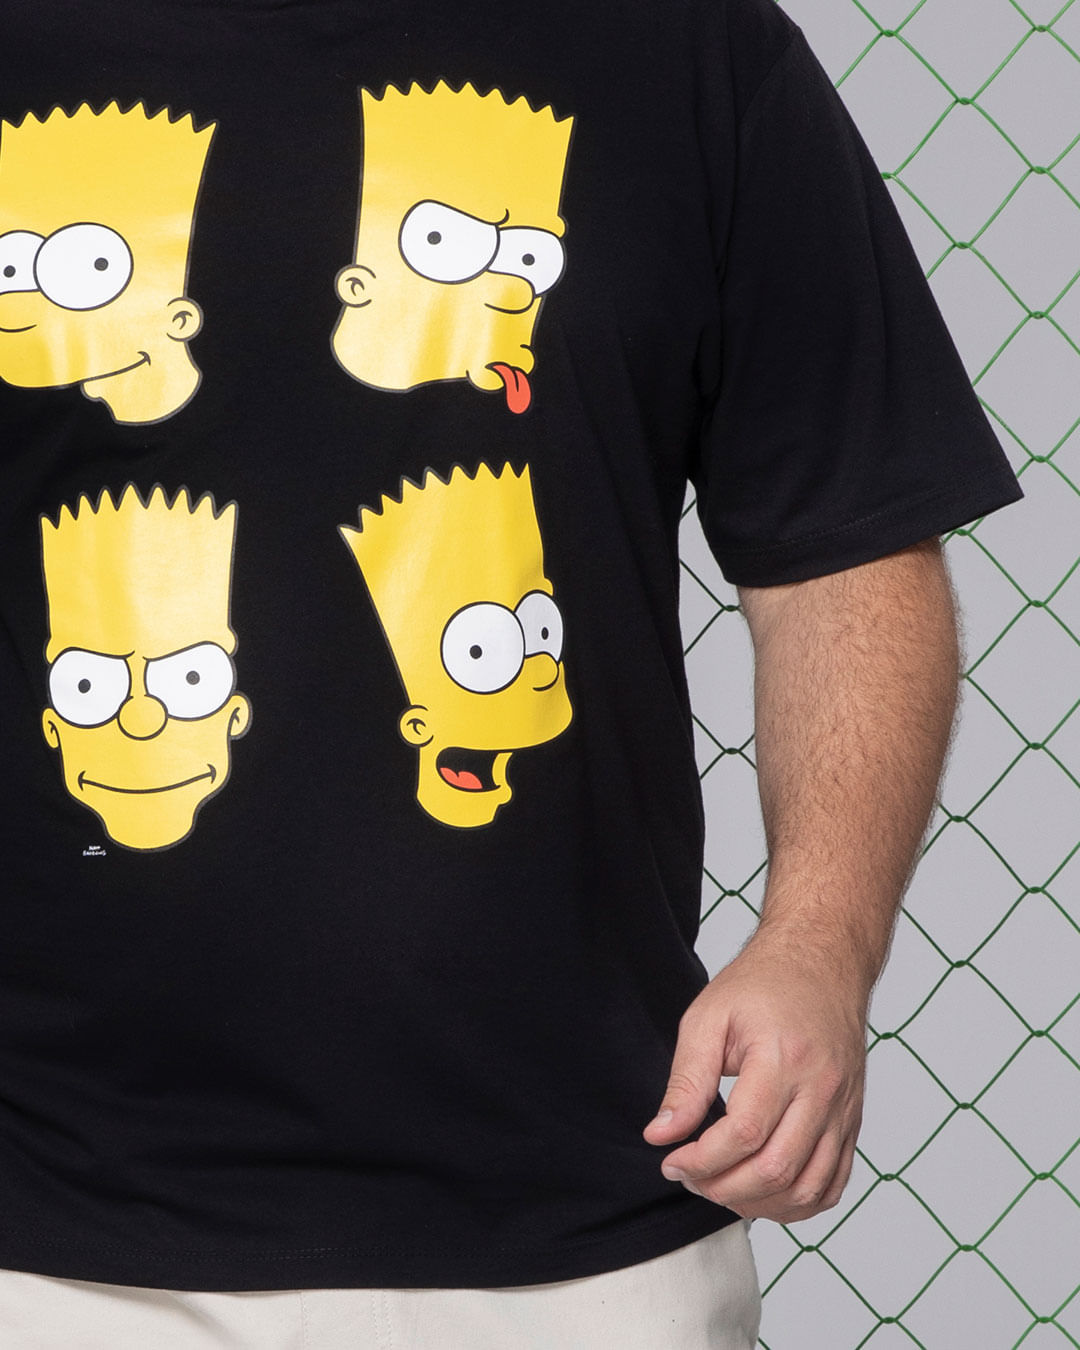 Camiseta-Plus-Size-Estampa-Bart-Os-Simpsons-Preta